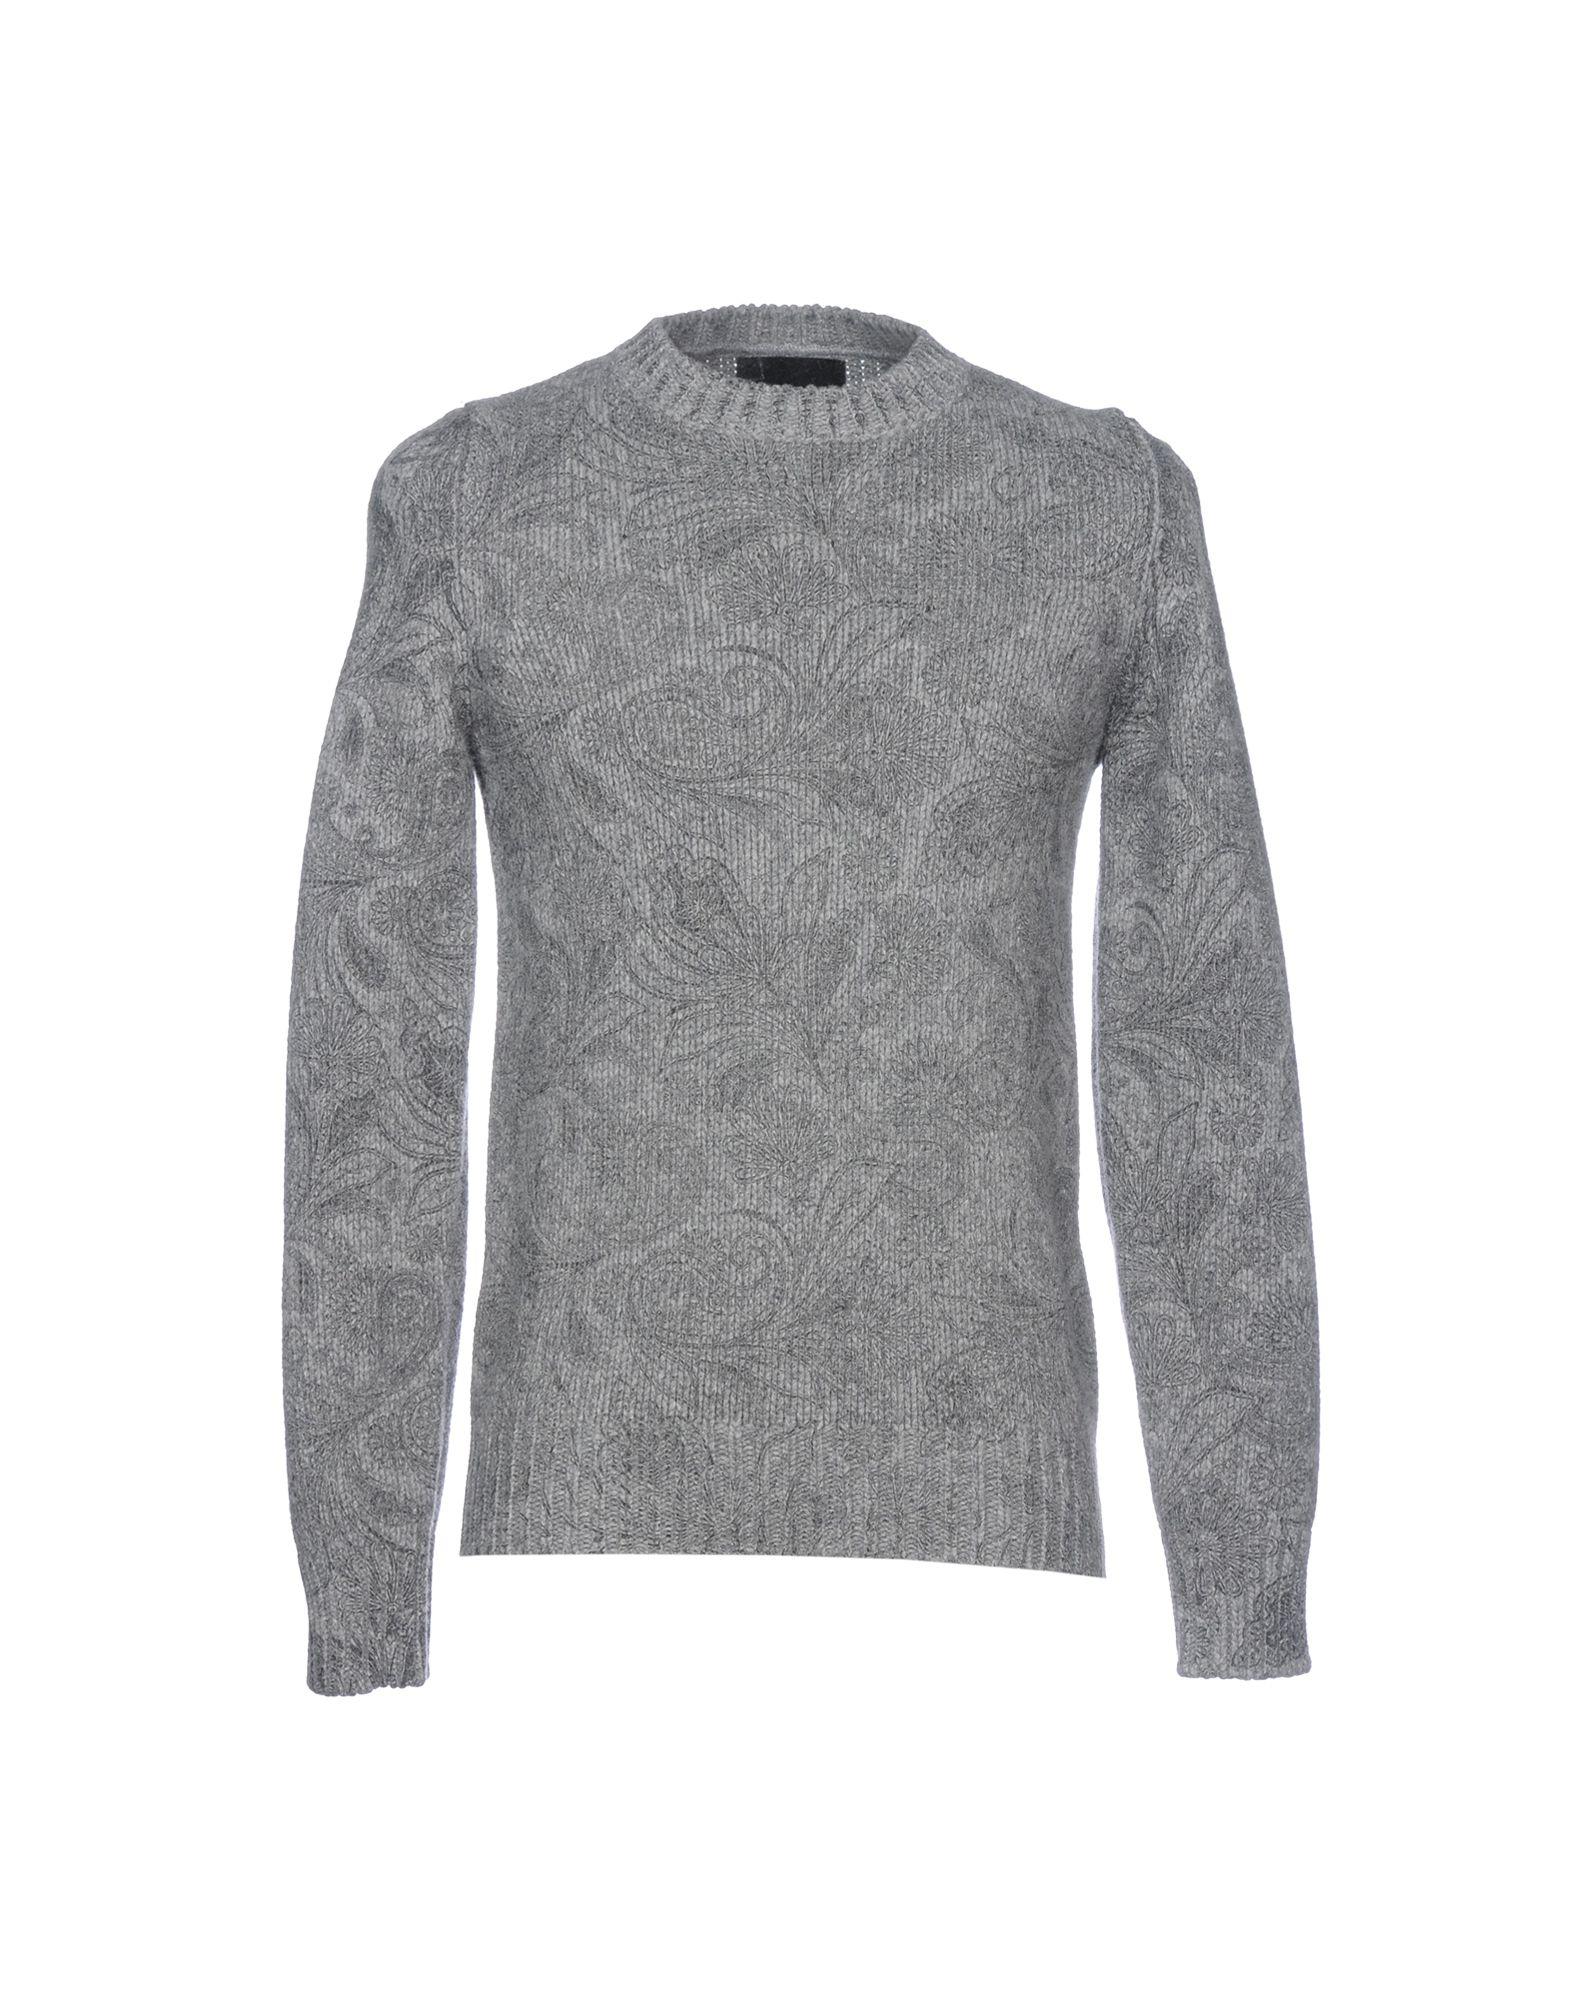 Jeordie's Sweater In Light Grey | ModeSens